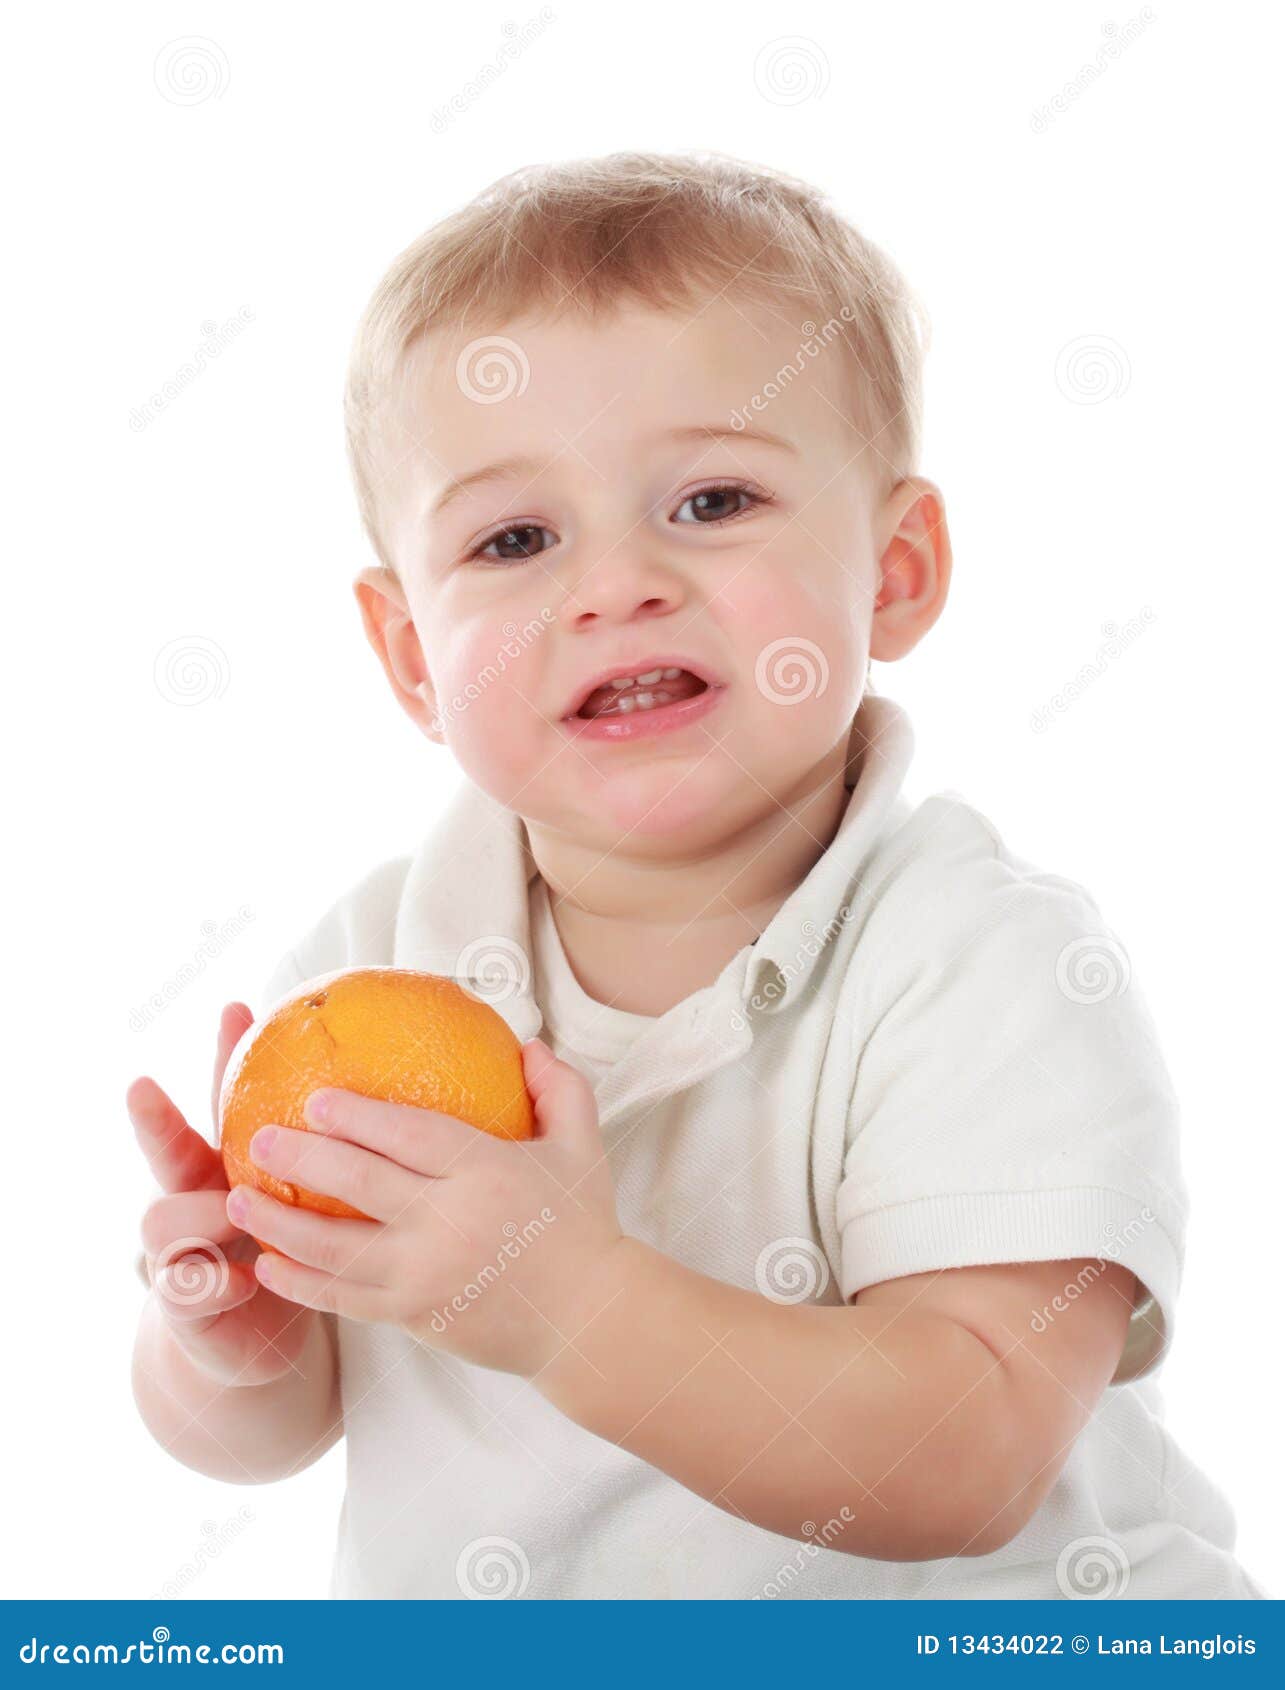 Baby Boy Holding An Orange Stock Photography - Image: 13434022